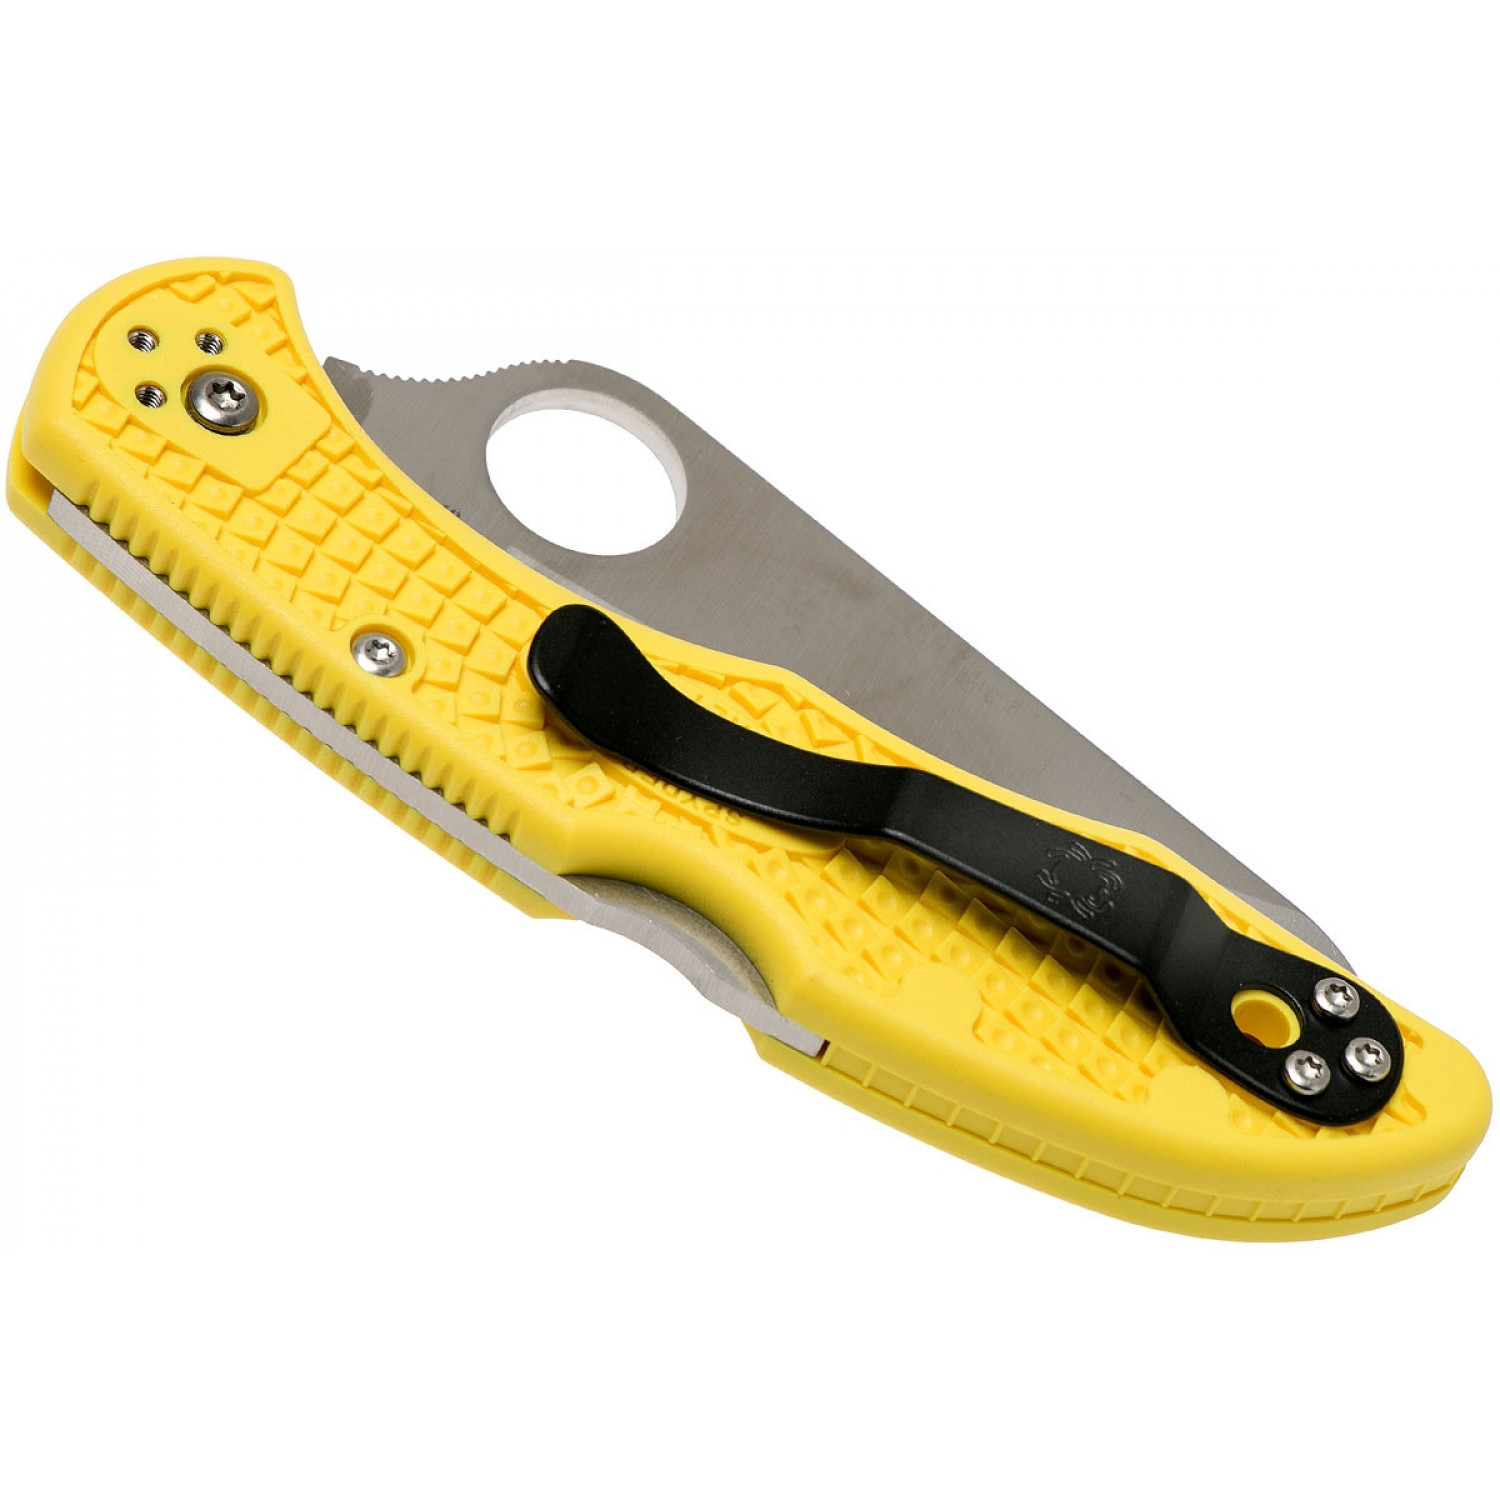 Складной нож Salt 2 - Spyderco C88SYL2, сталь H1 Satin Serrated, рукоять термопластик FRN, жёлтый - фото 6